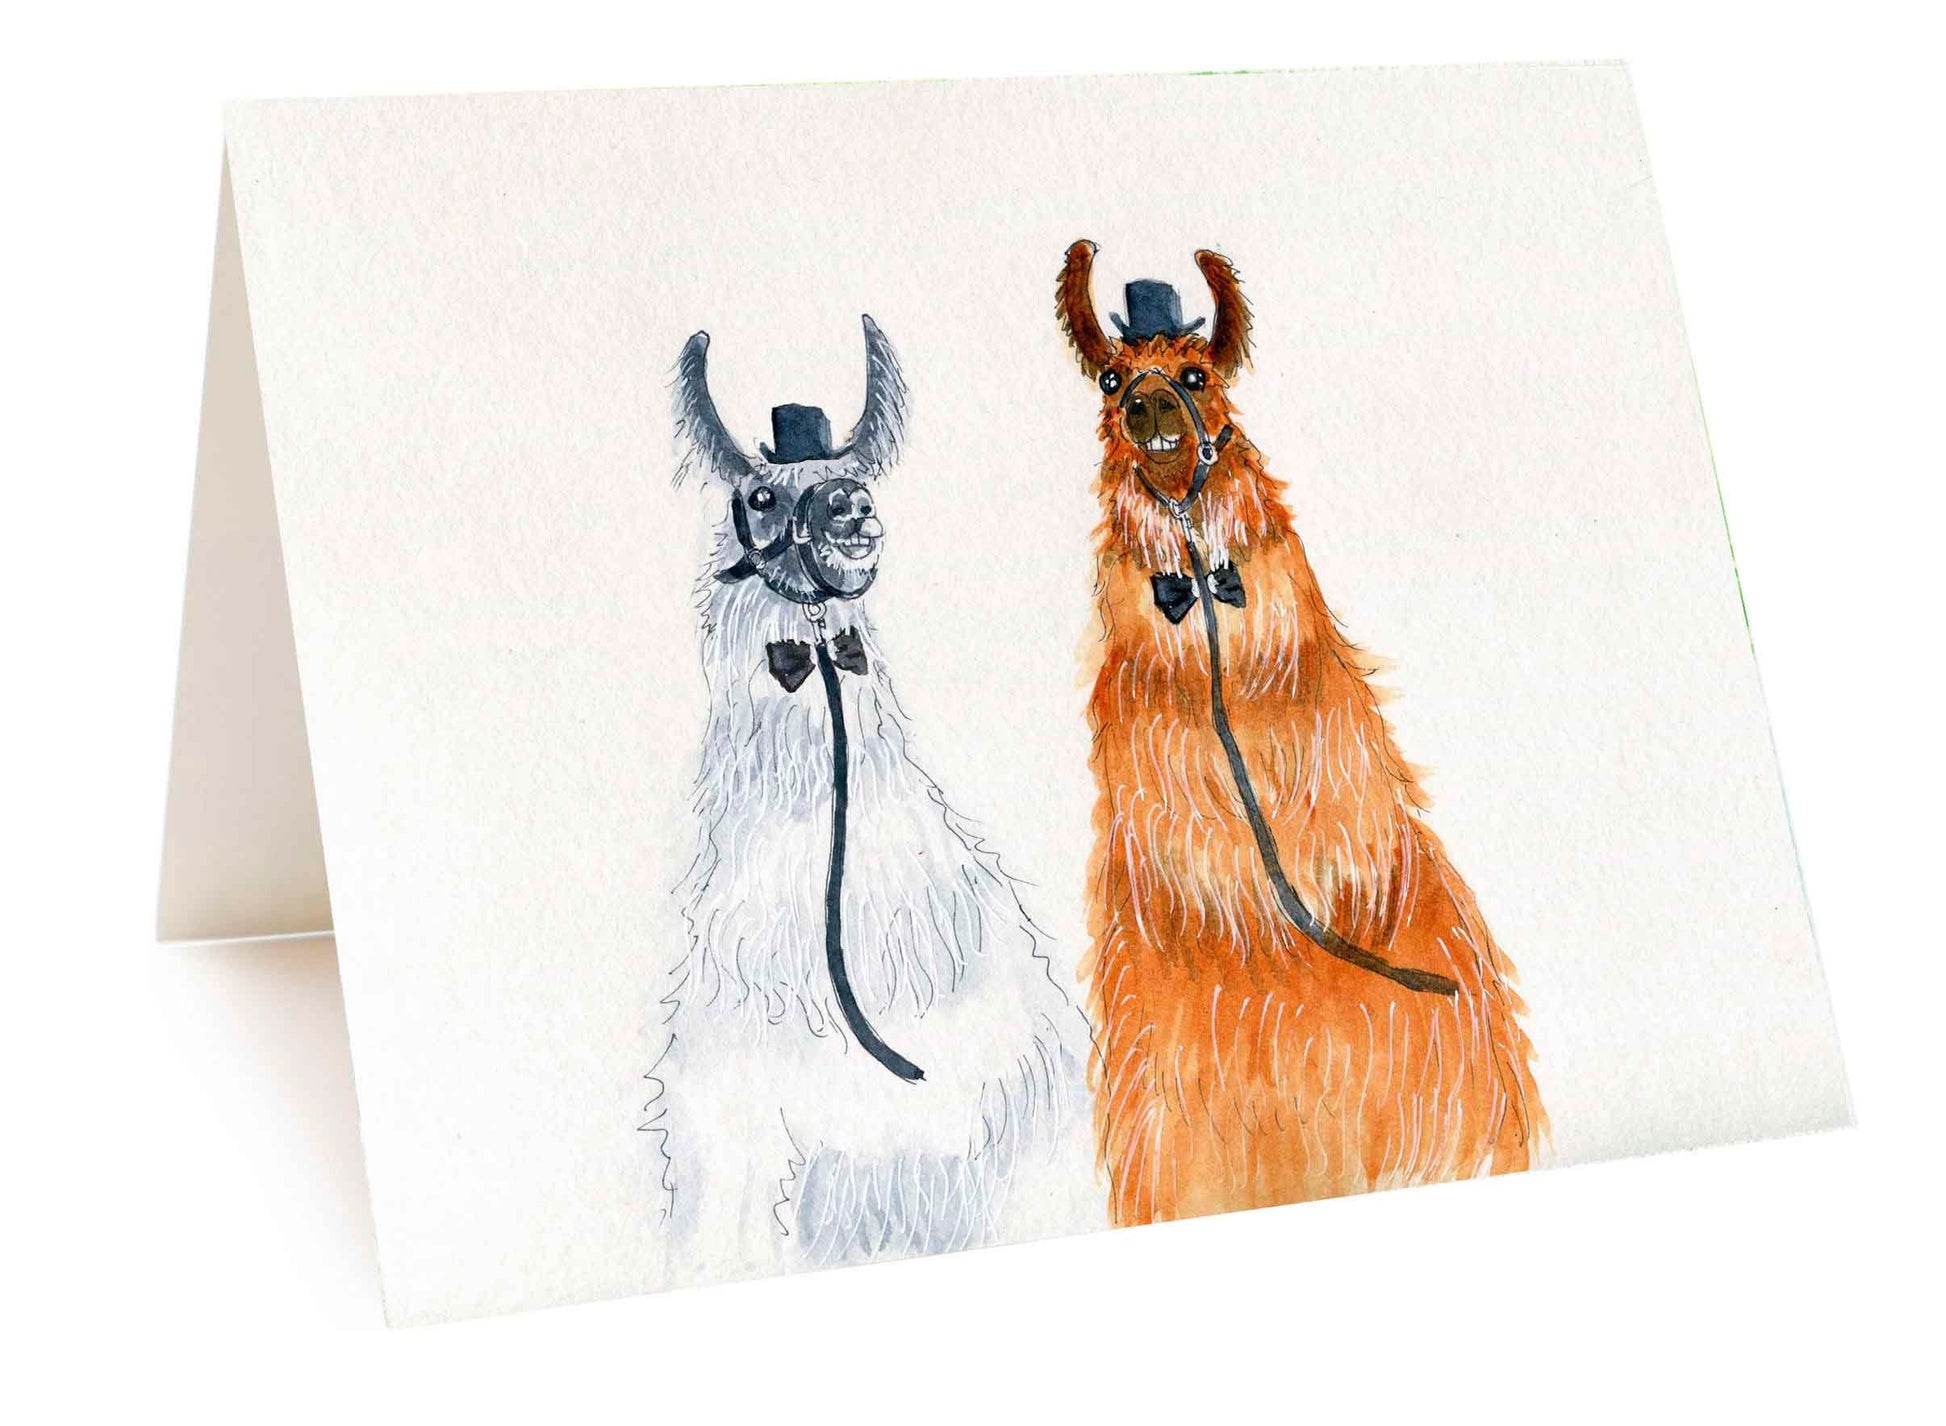 Funny Llama Gay Wedding Card For Groom And Groom, Funny Wedding Cards For Gay Couple